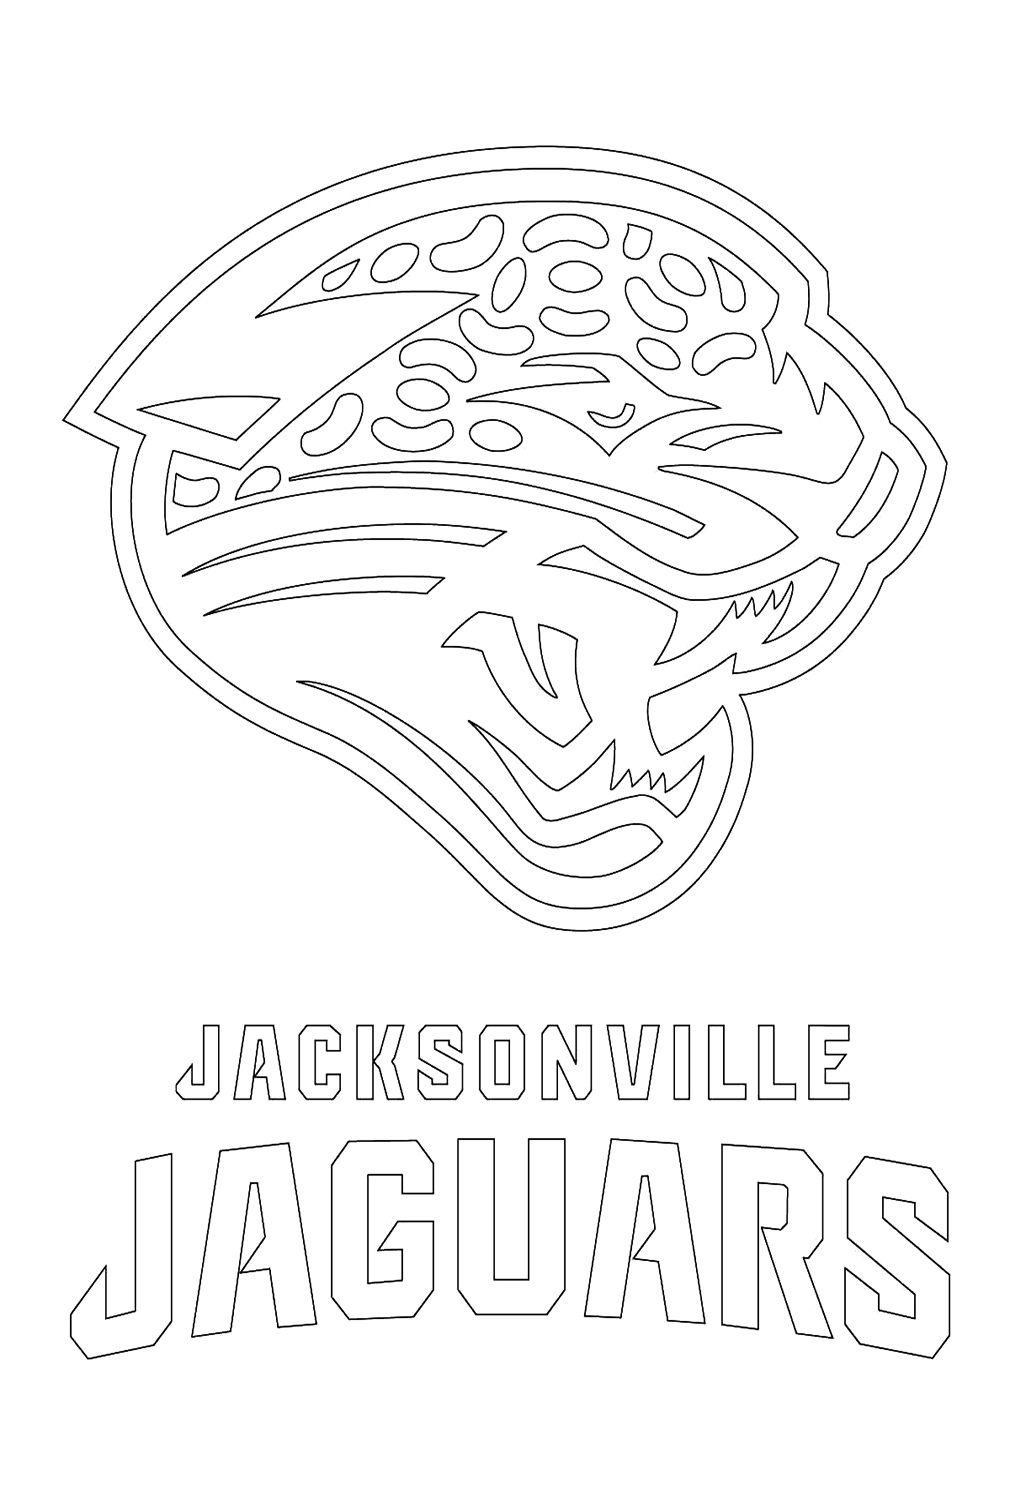 Logotipo de los Jacksonville Jaguars de la NFL